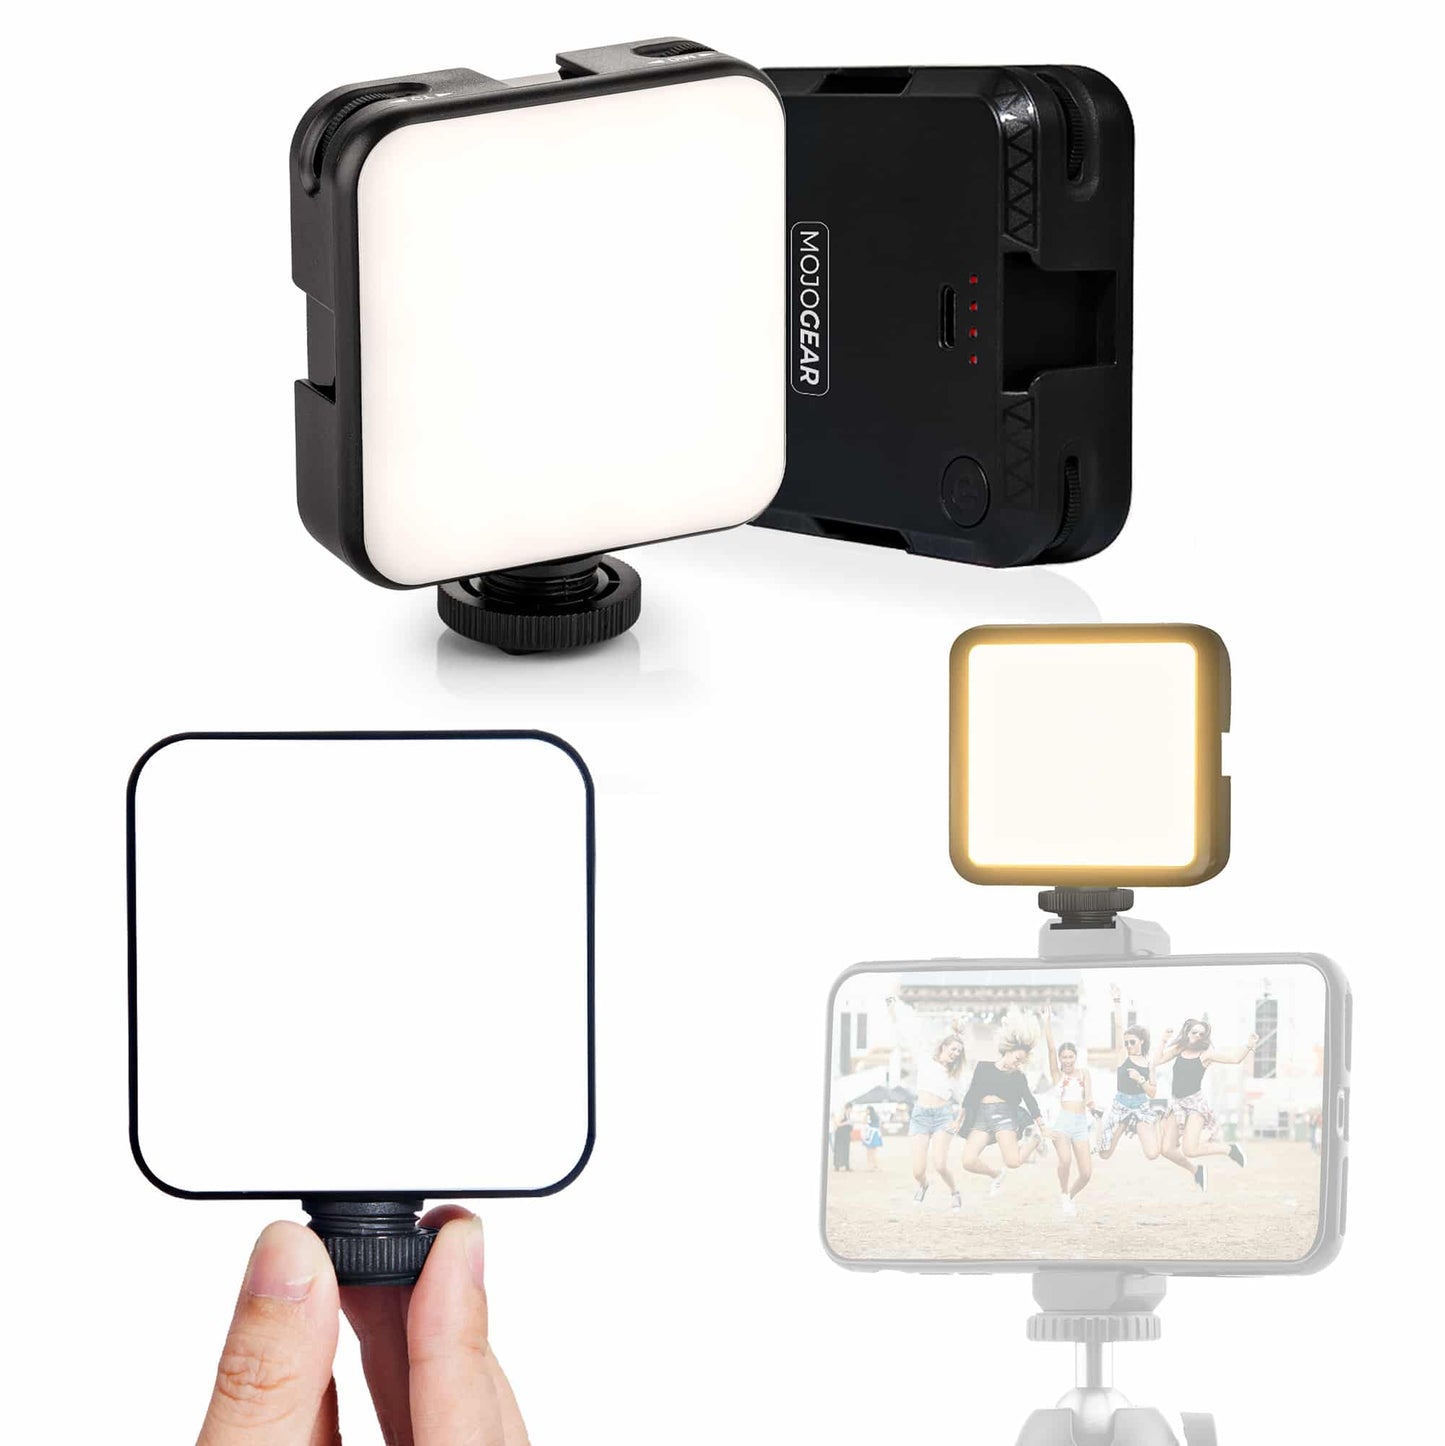 MOJOGEAR W64 Multi Color Mini LED lamp for smartphone and camera